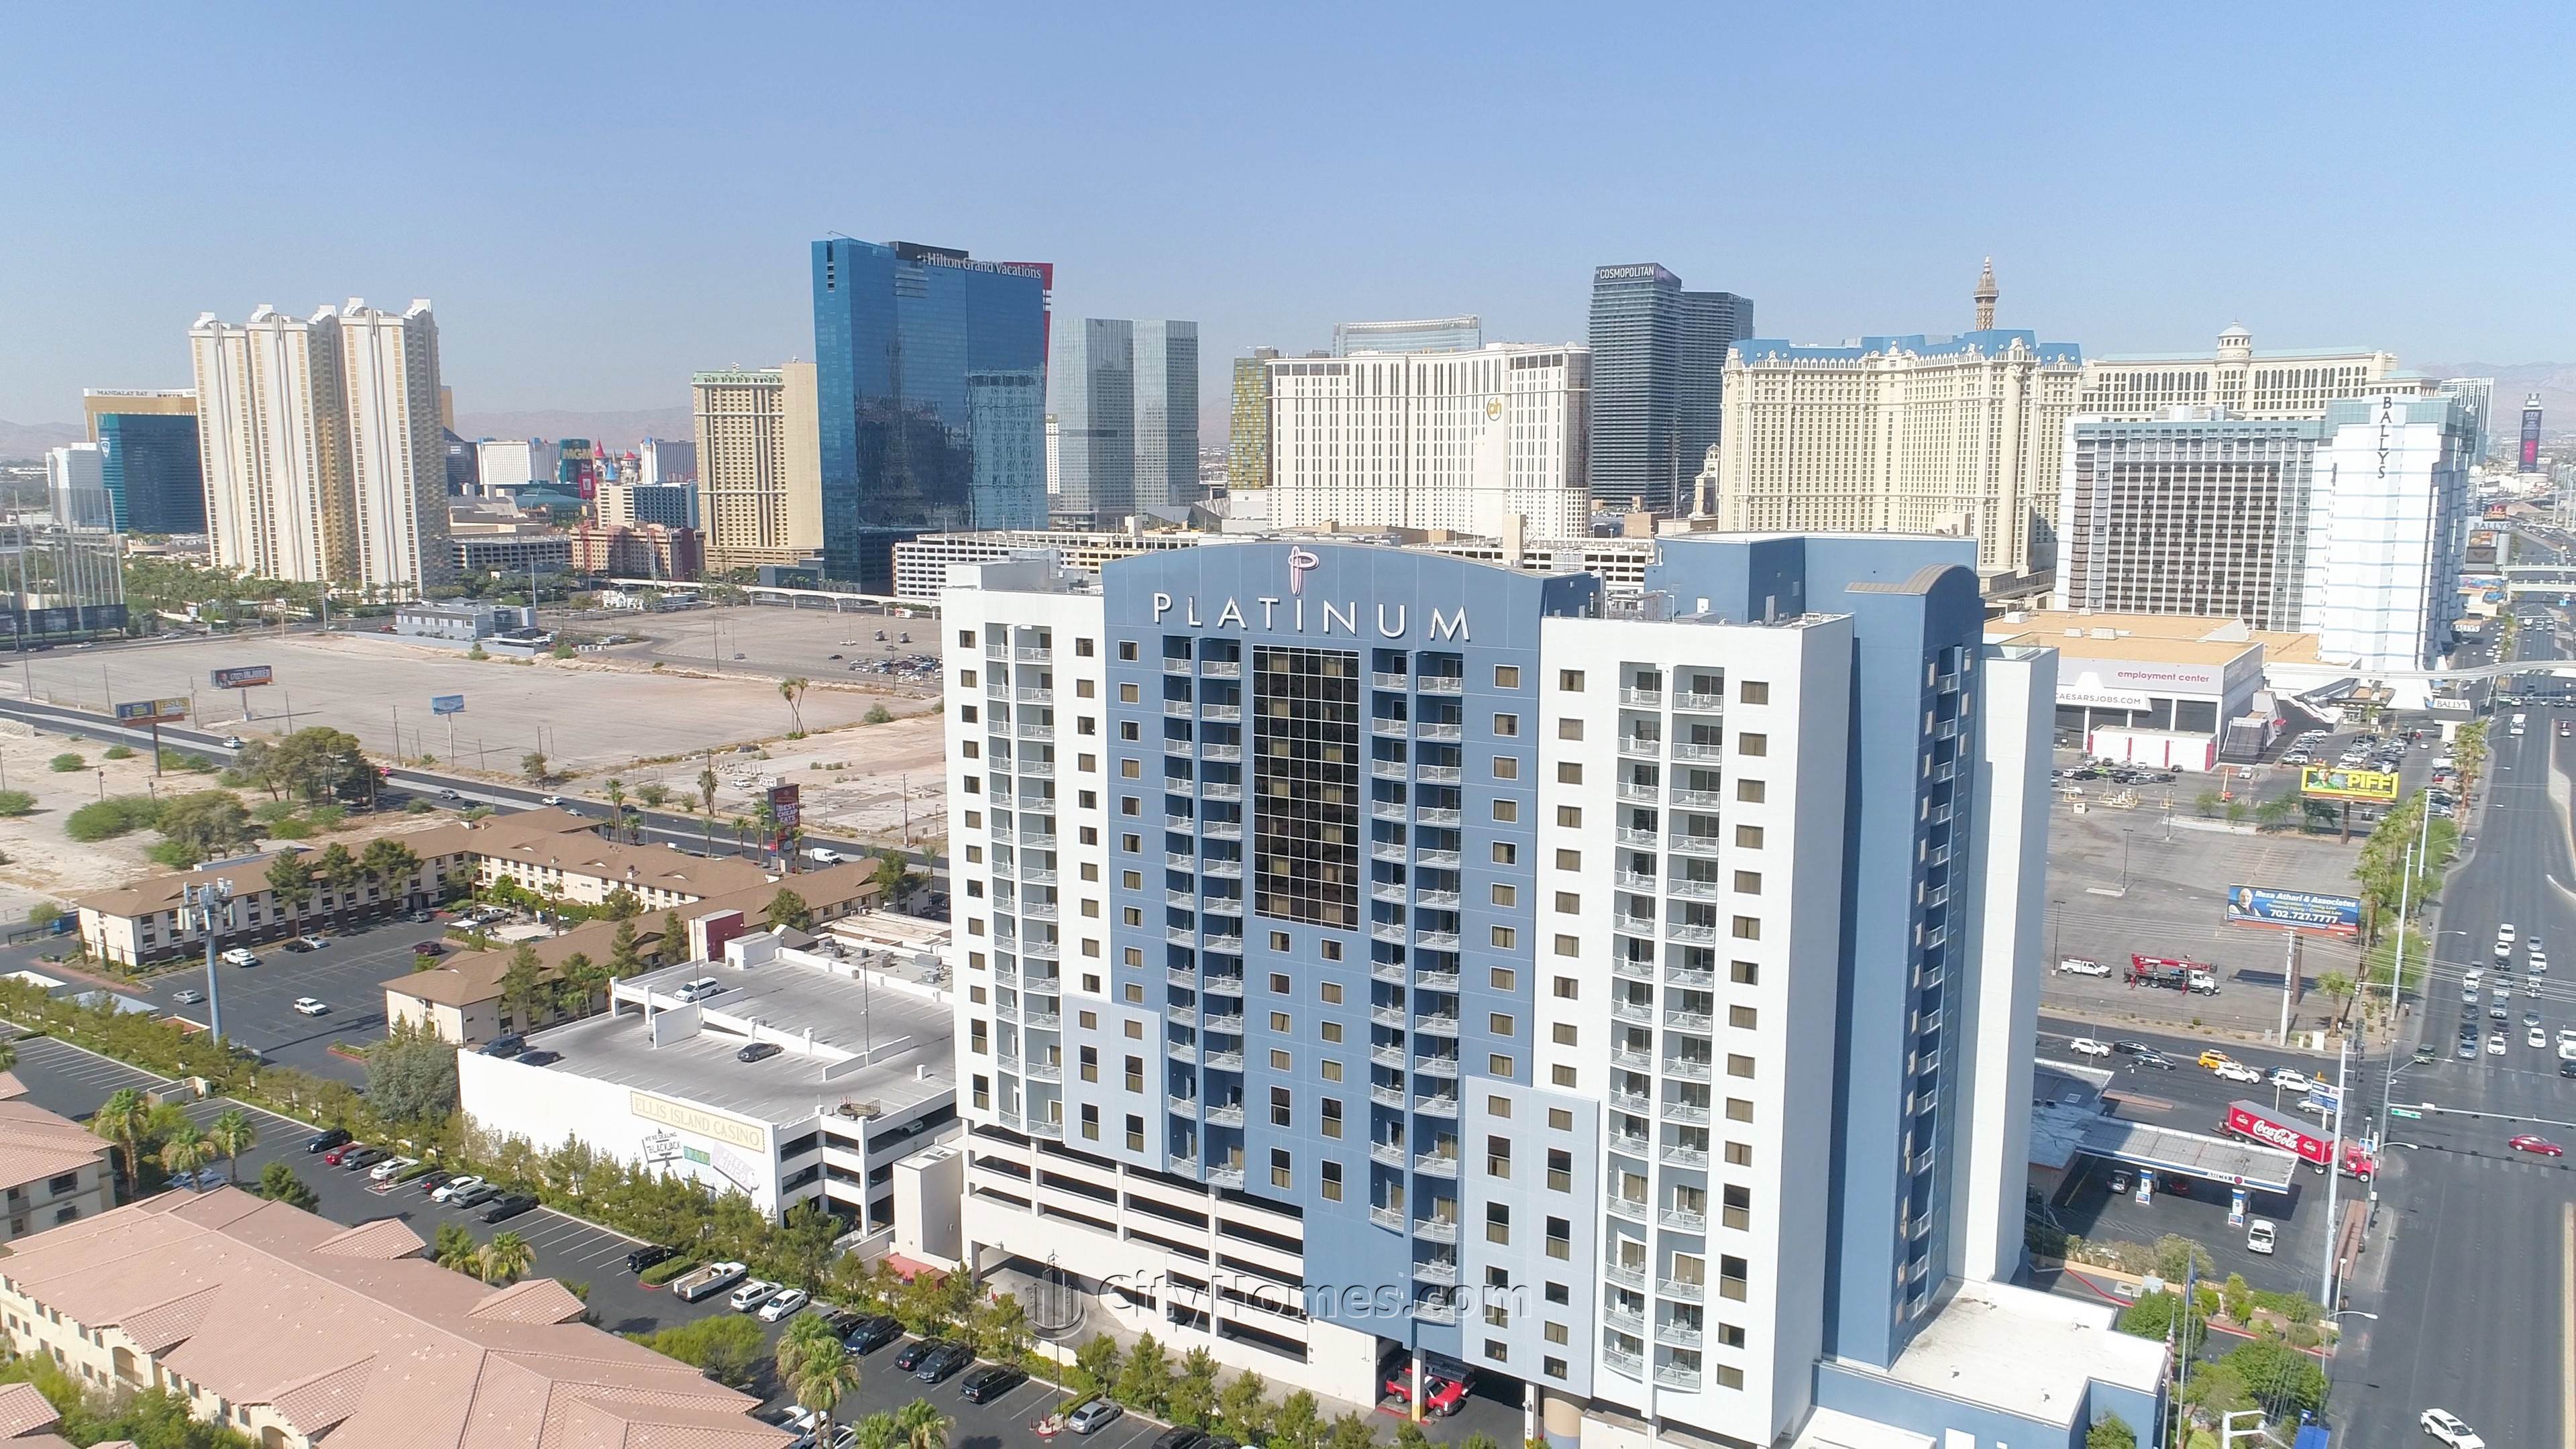 6. Platinum Resort building at 211 E Flamingo Road, Paradise, Las Vegas, NV 89169